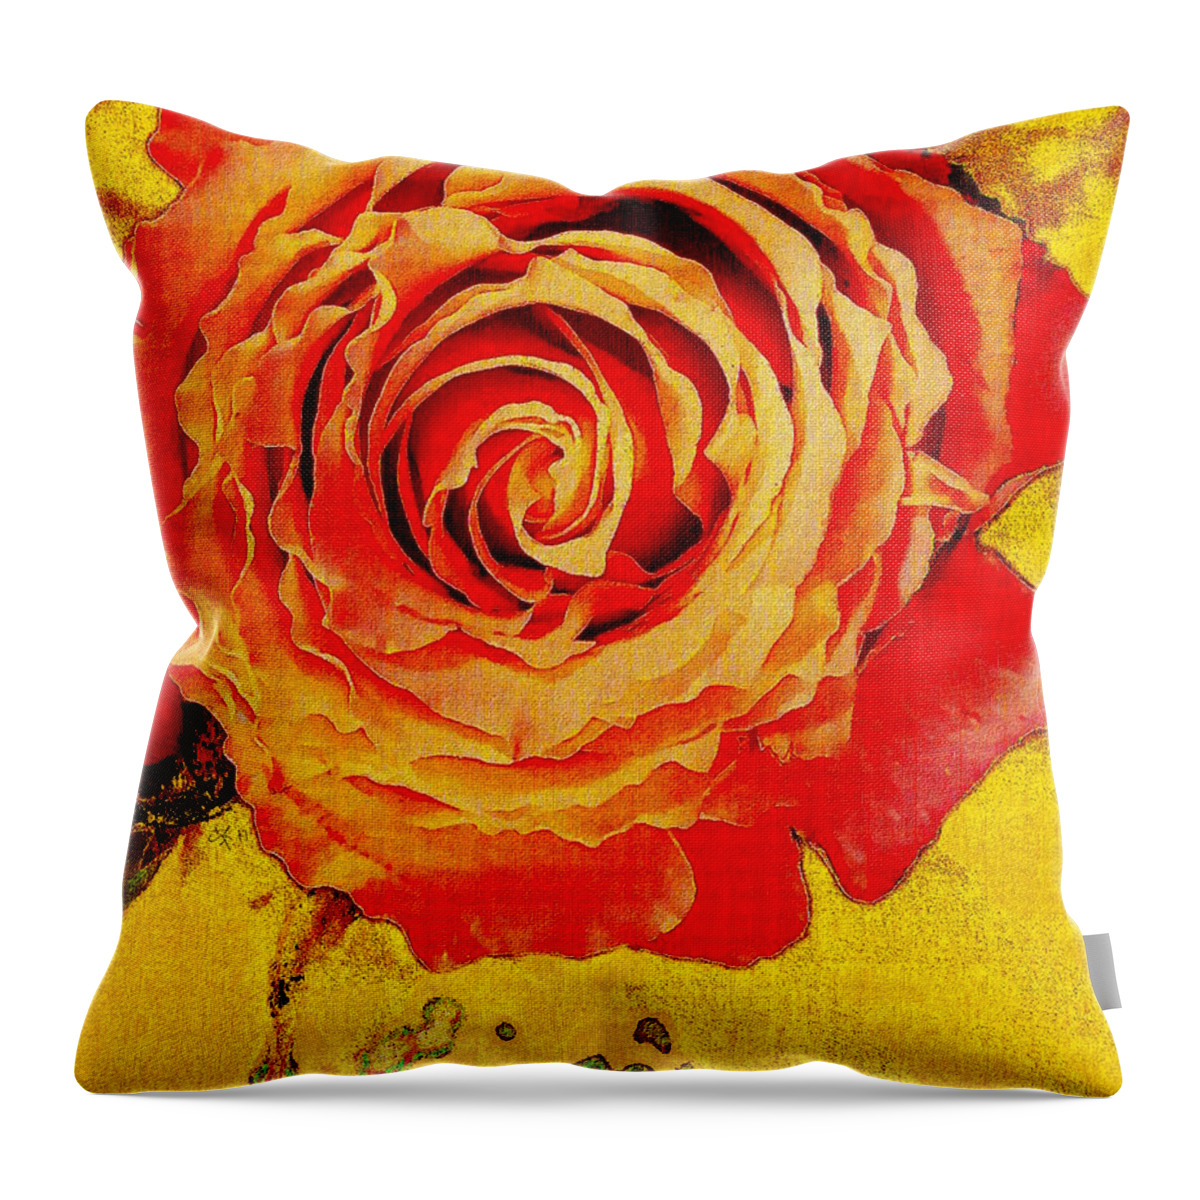 Rose Throw Pillow featuring the digital art The Orange rose by Wonju Hulse